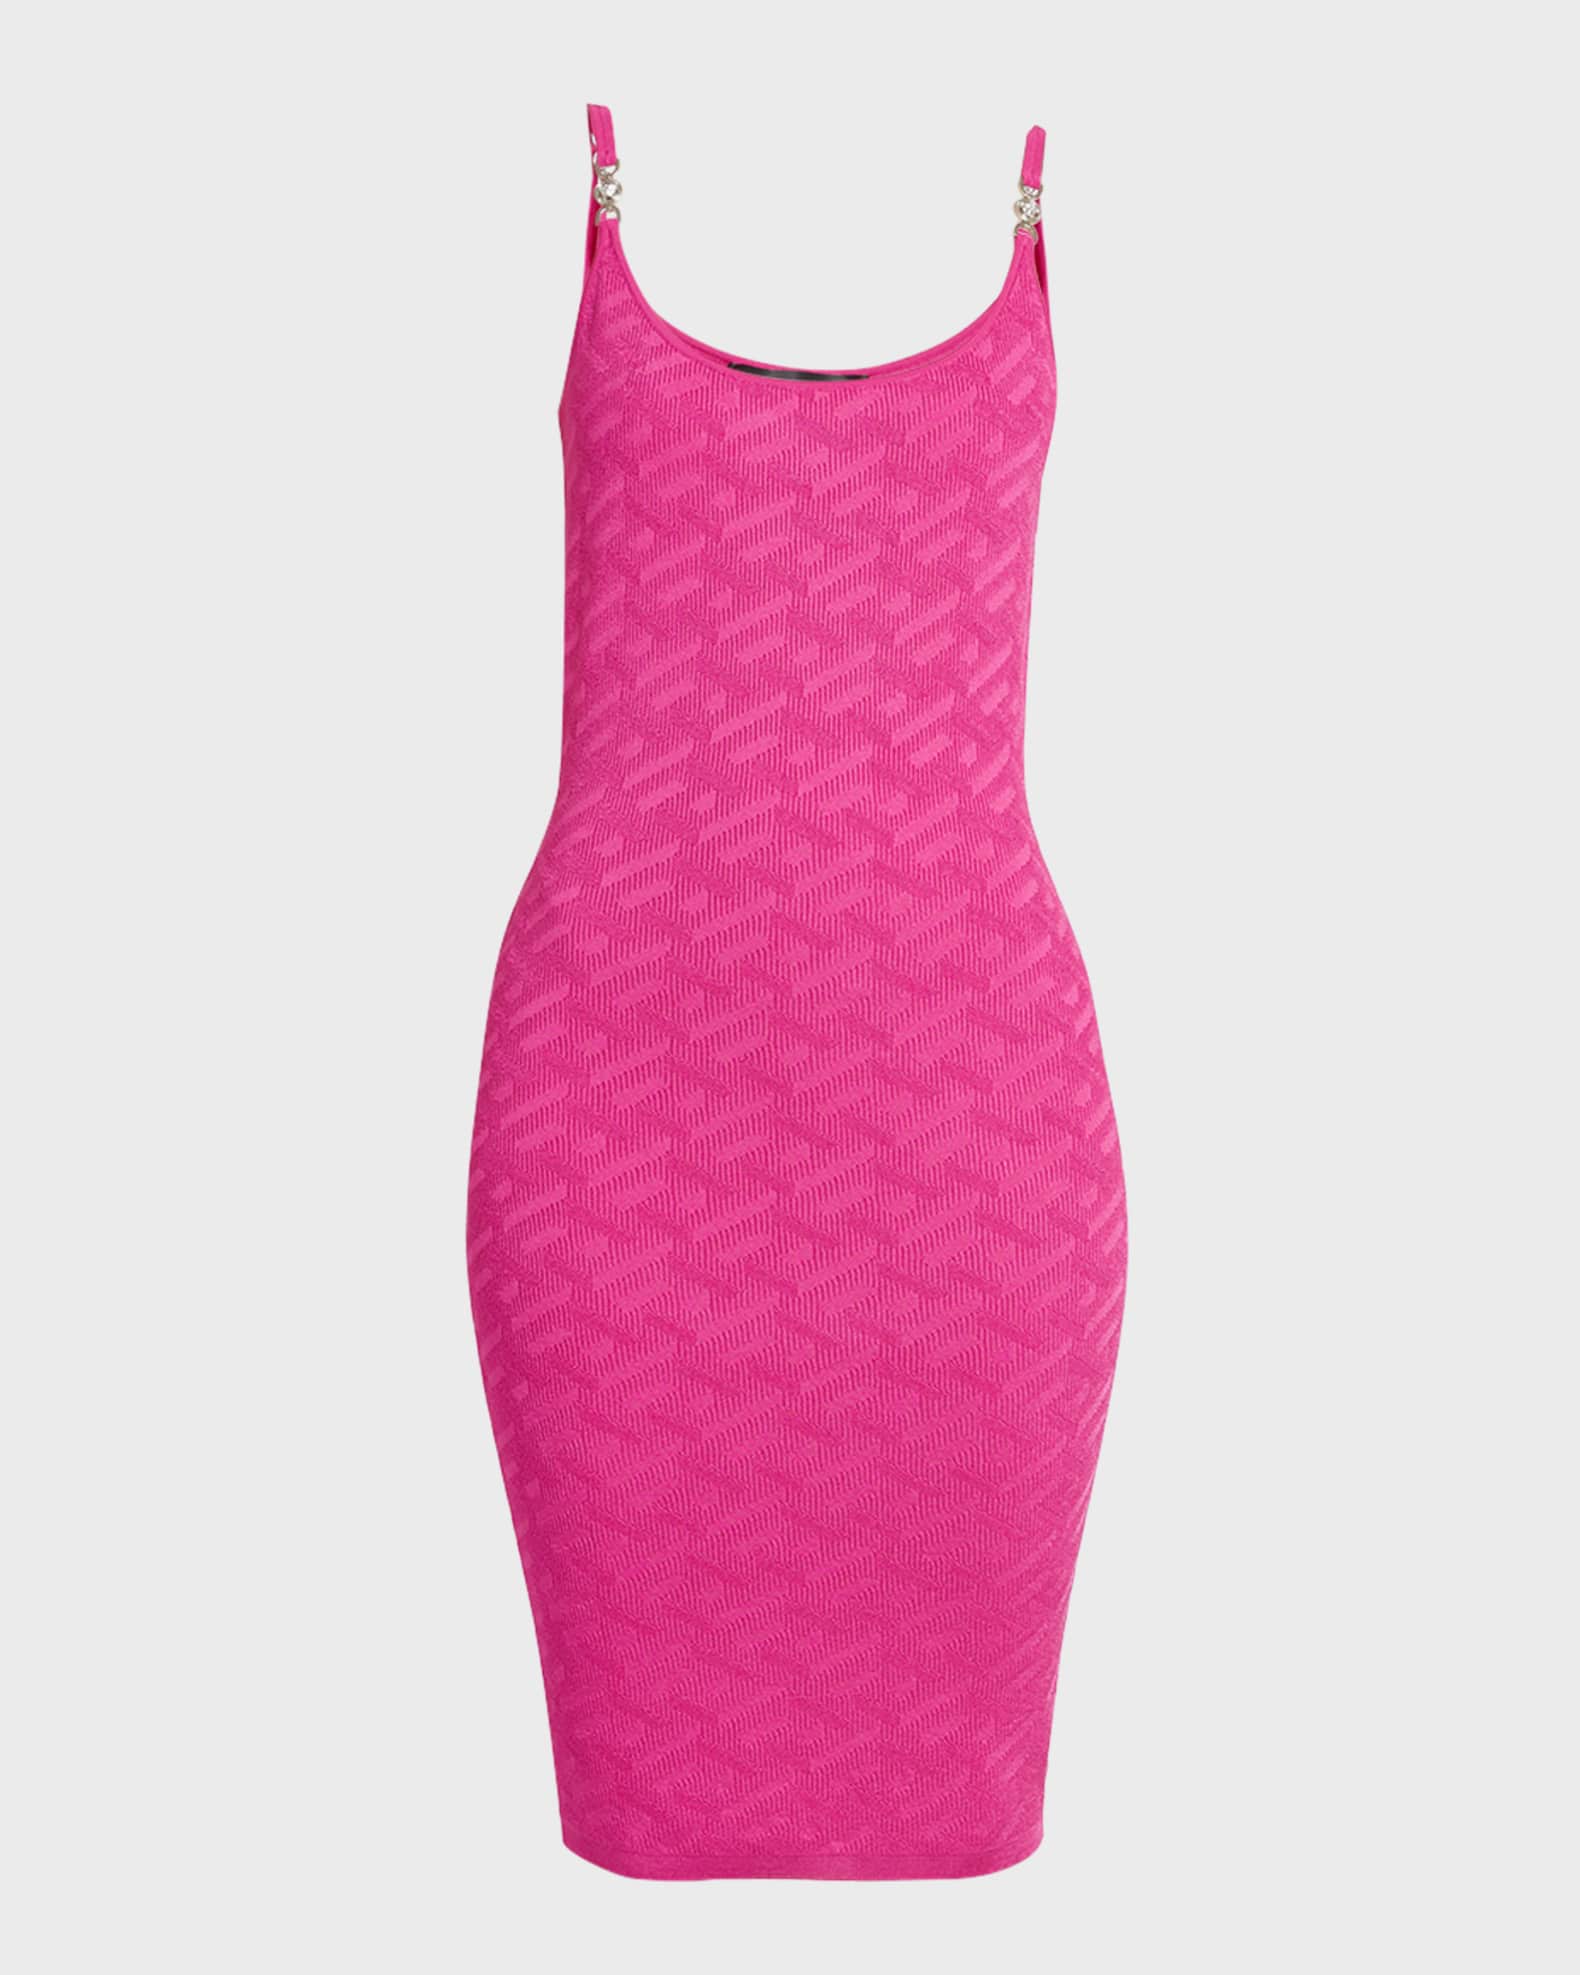 Louis Vuitton by Marc Jacobs dress top tunic sz S monogram stretch bodycon  pink